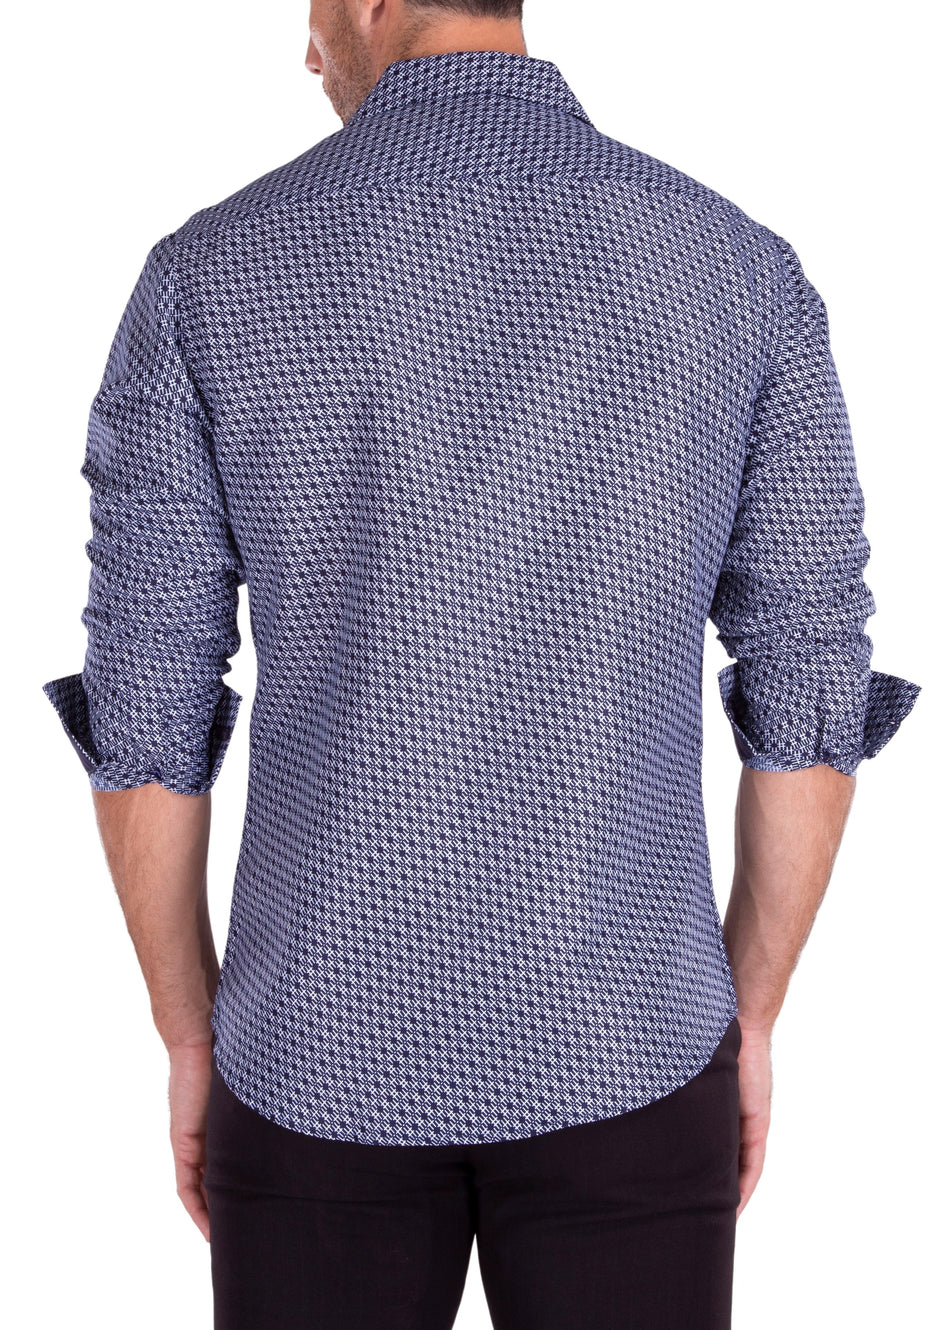 212394 - Navy Long Sleeve Shirt